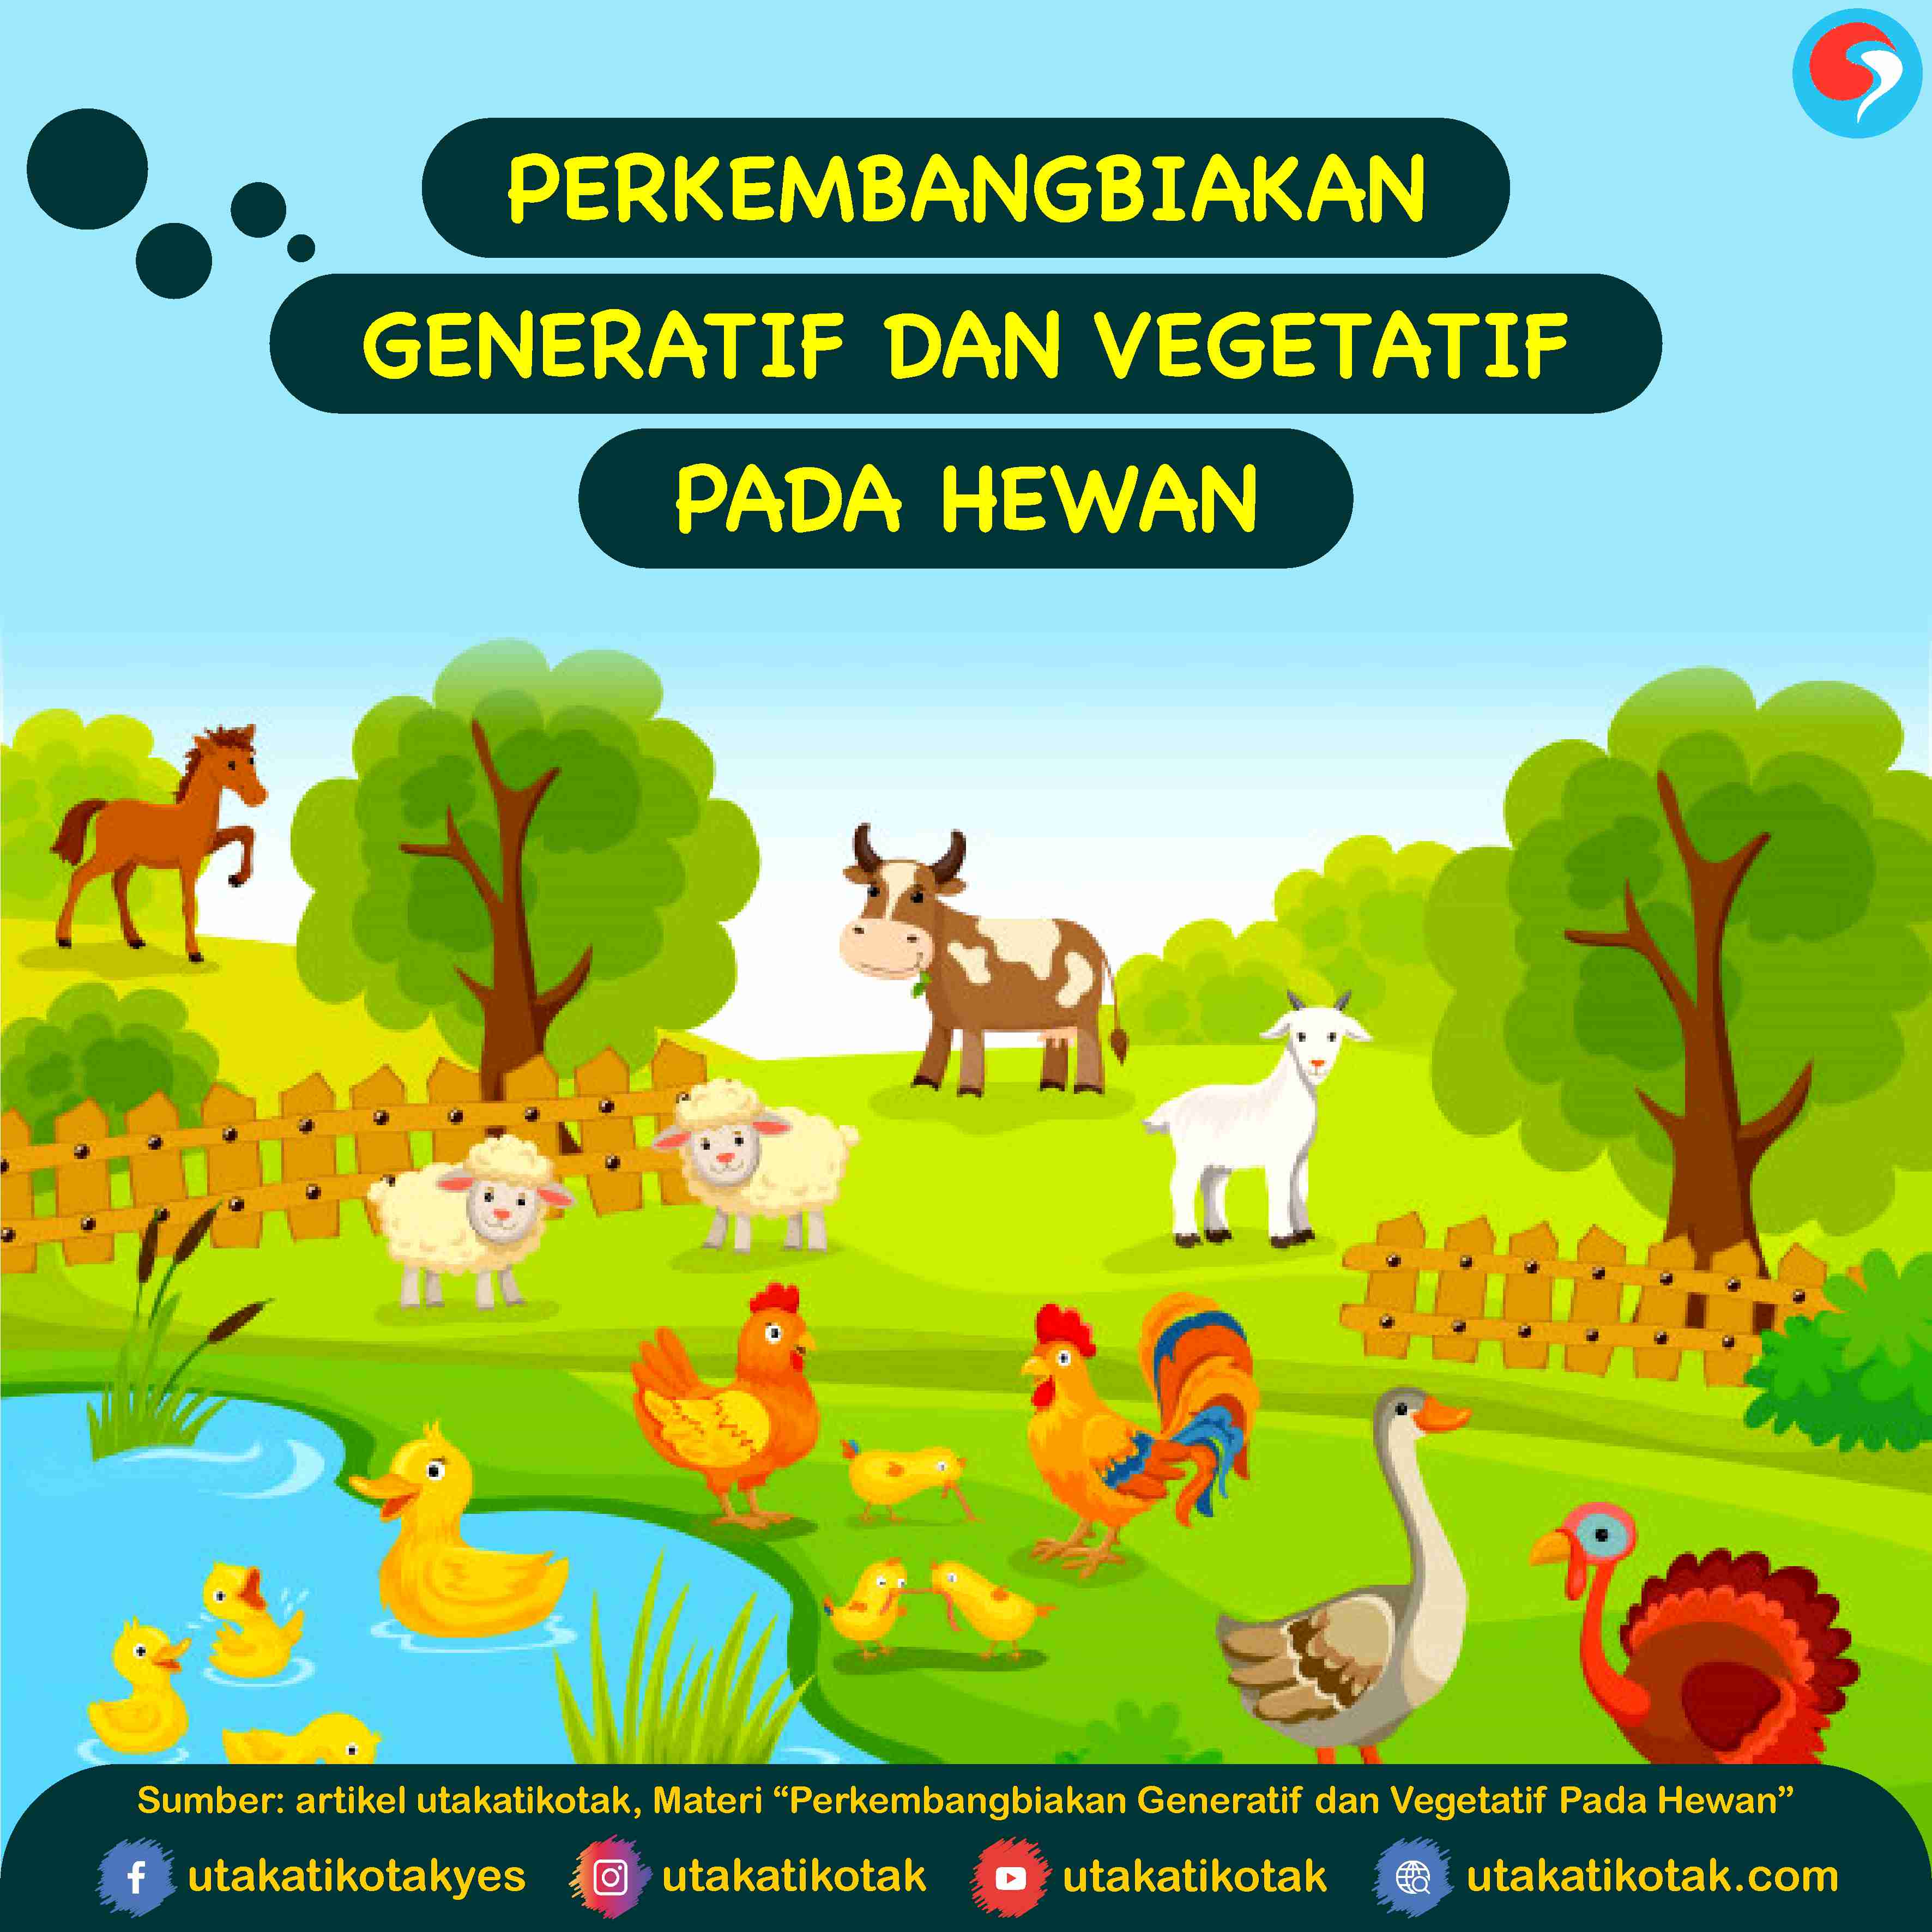 Perkembangbiakan Generatif dan Vegetatif Pada Hewan